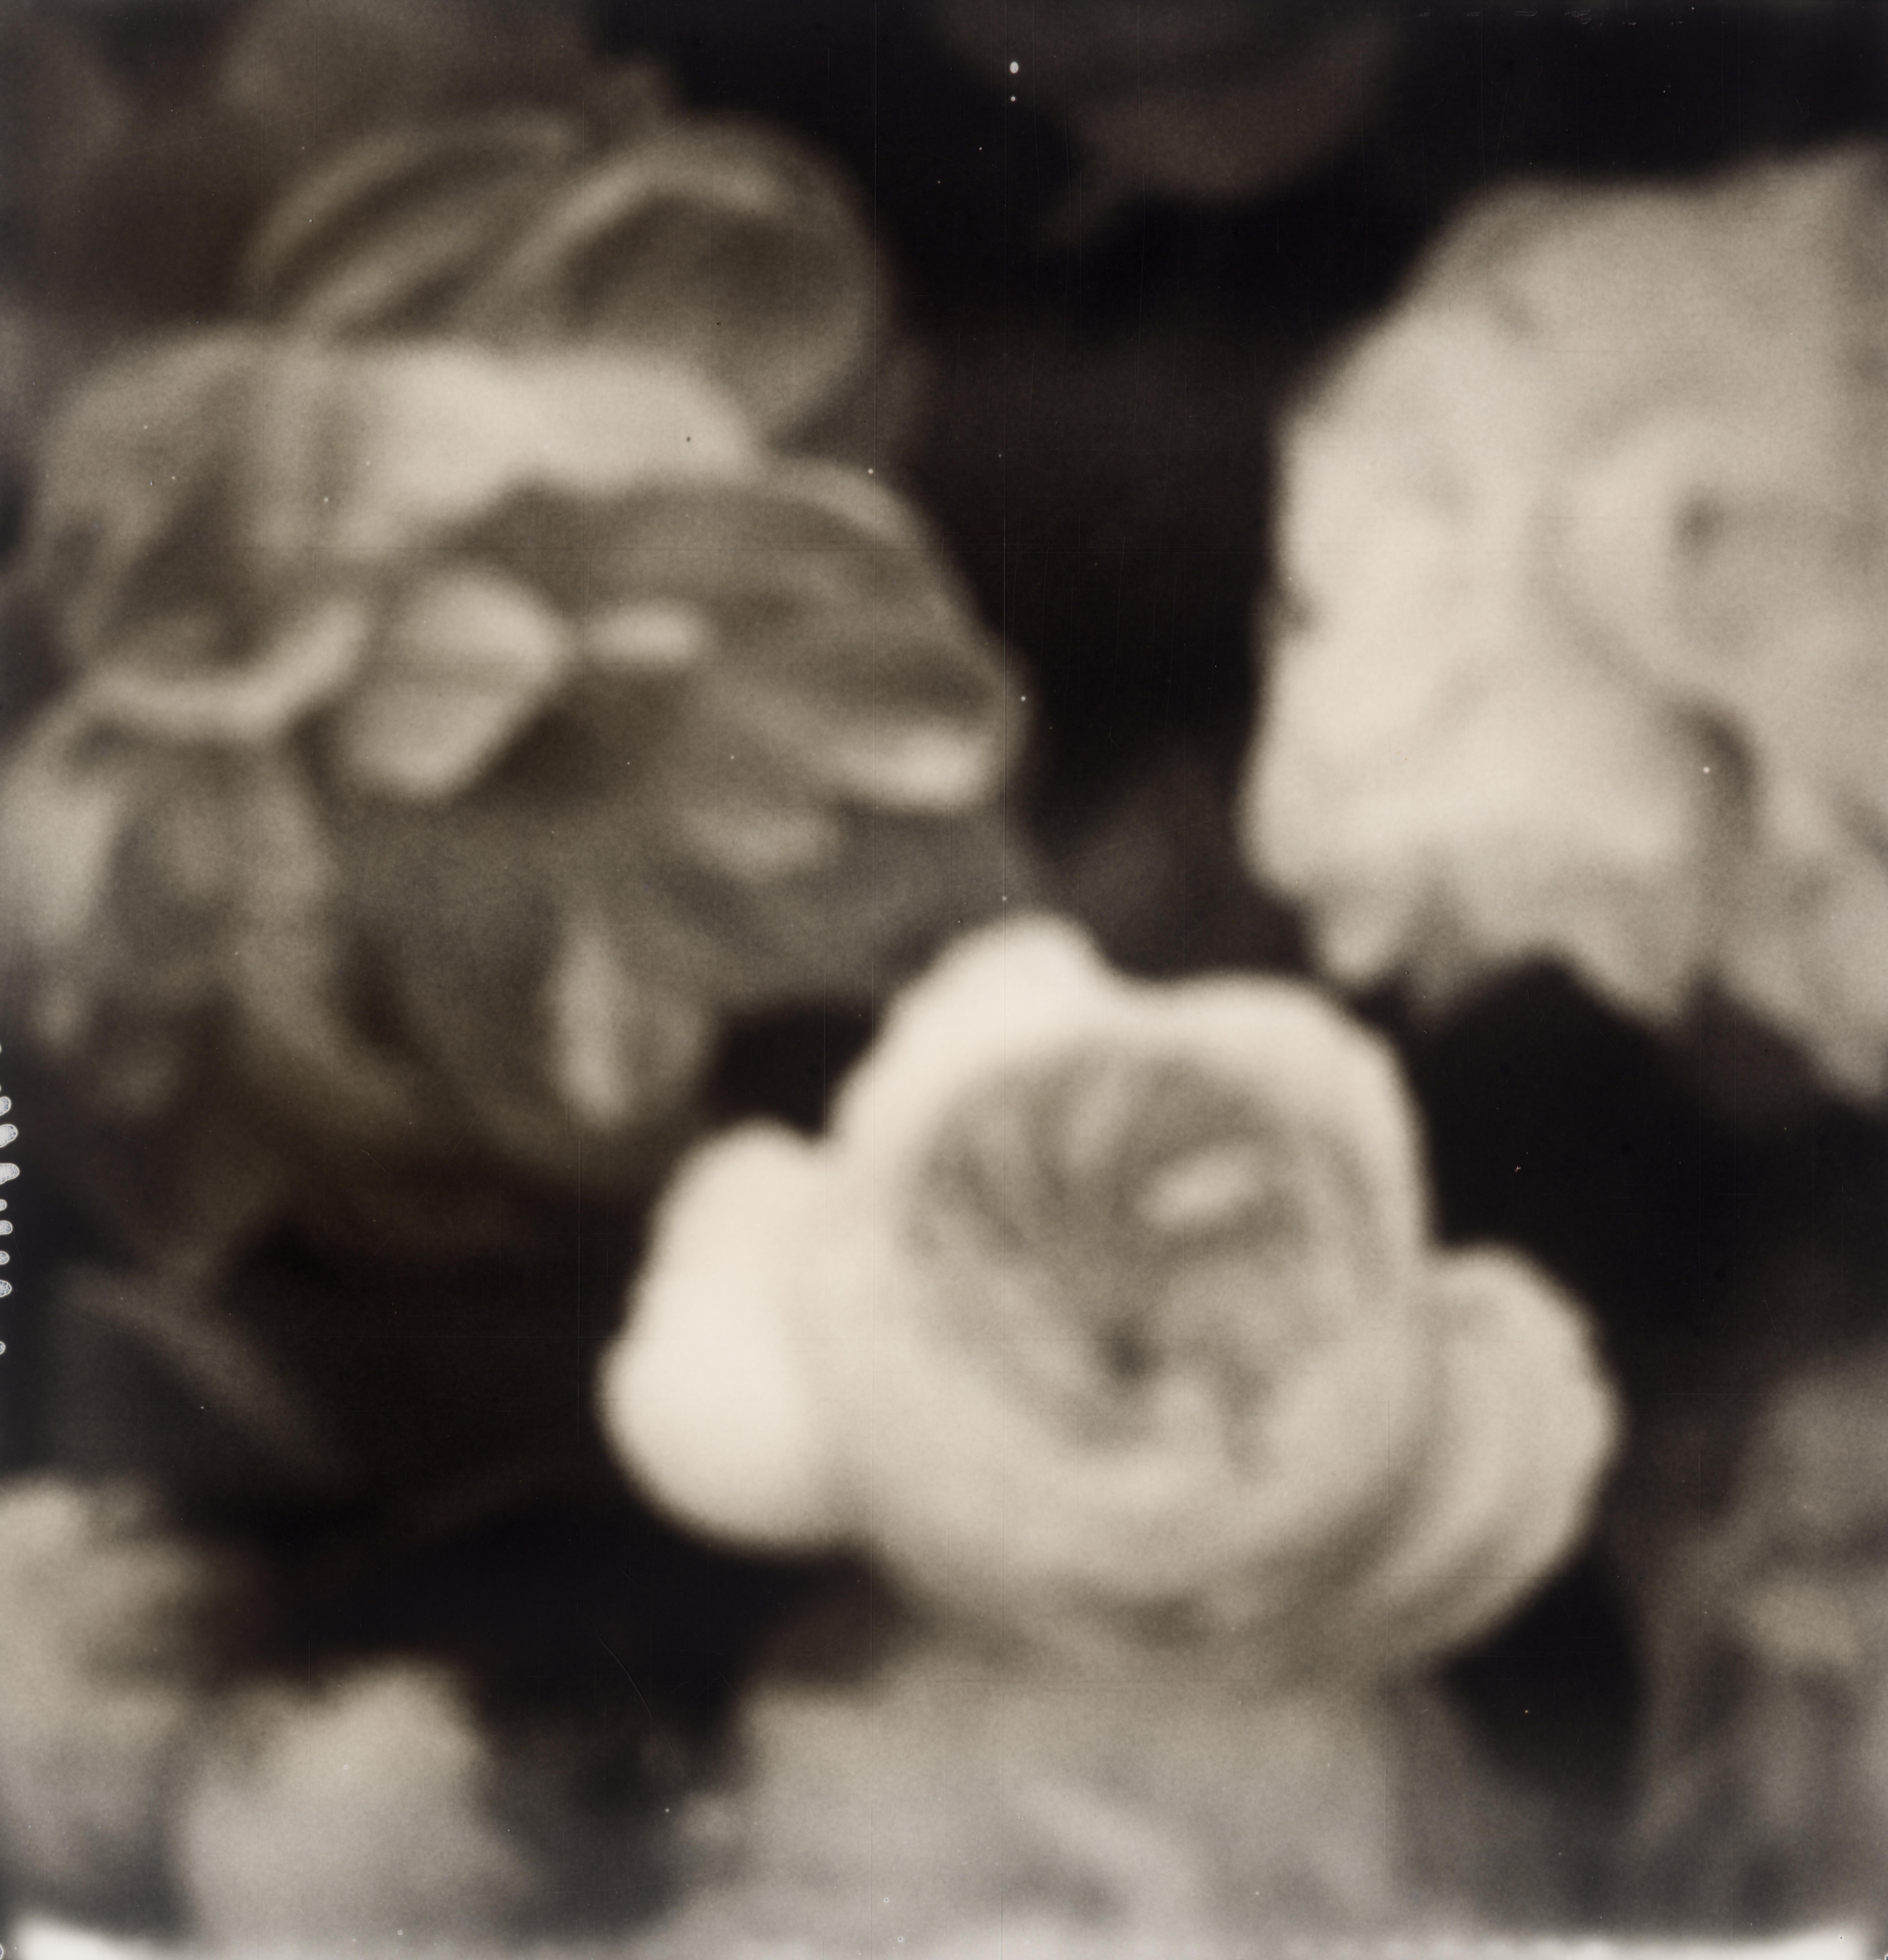 Starlet Rose - 21st Century Contemporary Photographic Print - B/W Polaroid